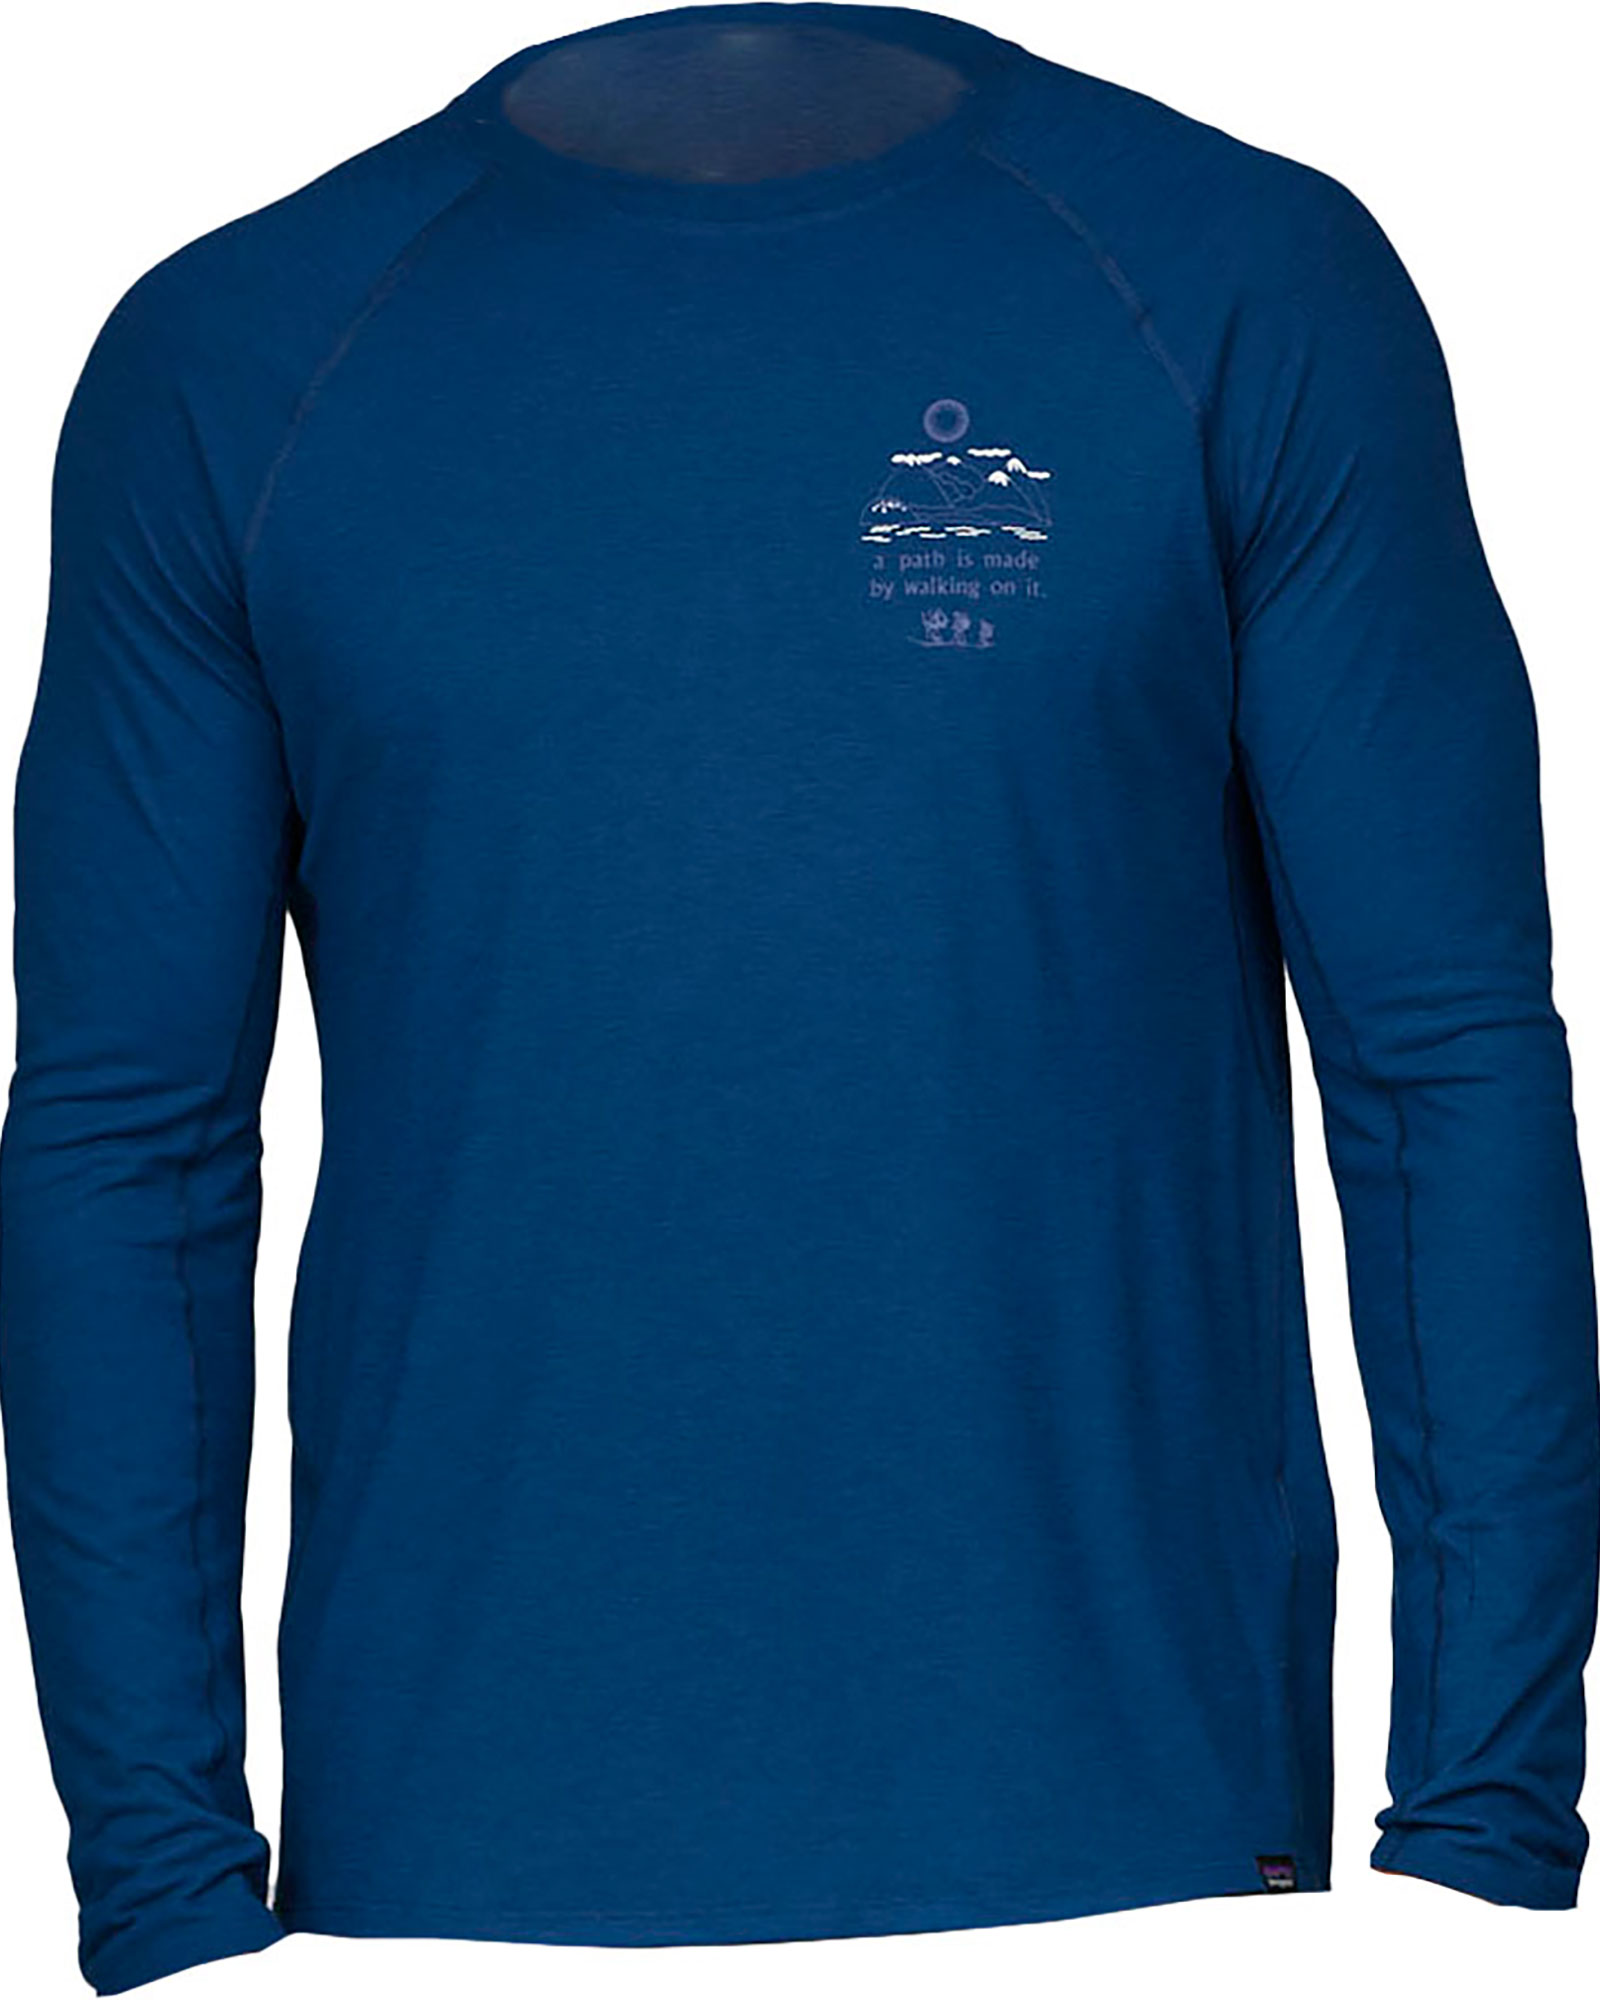 Patagonia Men’s Cap Cool Trail Long Sleeved Shirt - Lagom Blue L